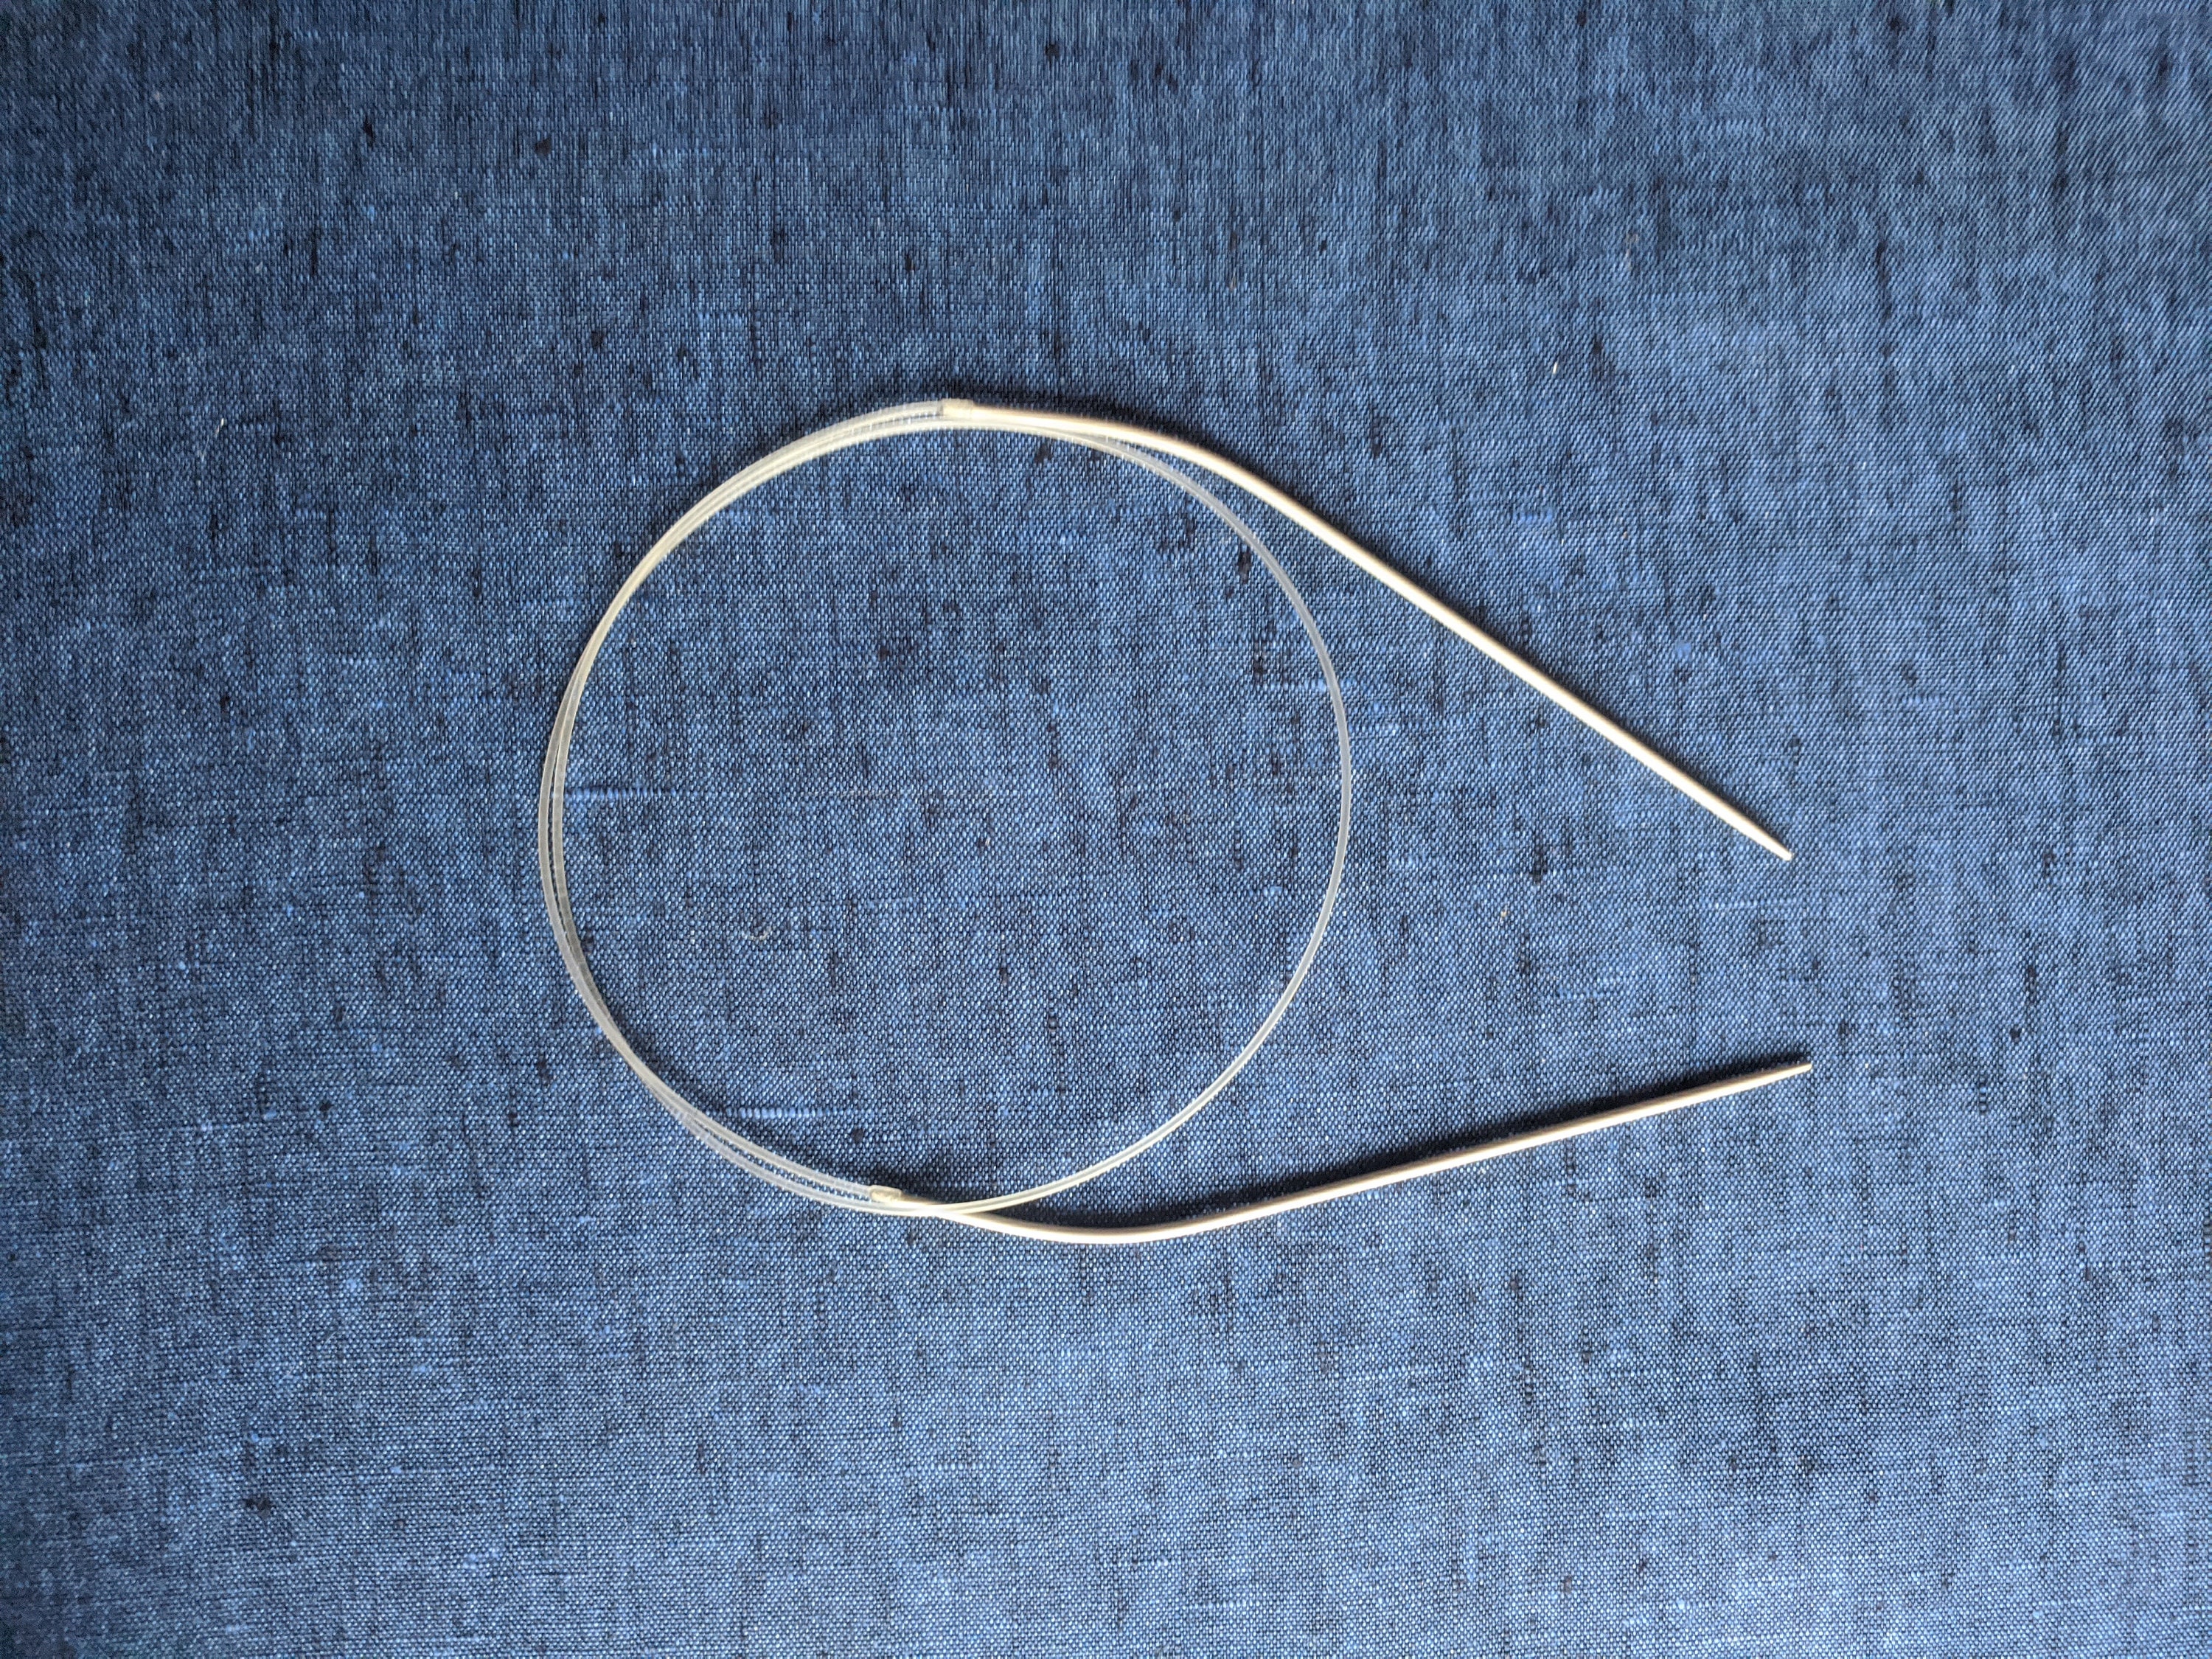 Prym Circular Needle Case